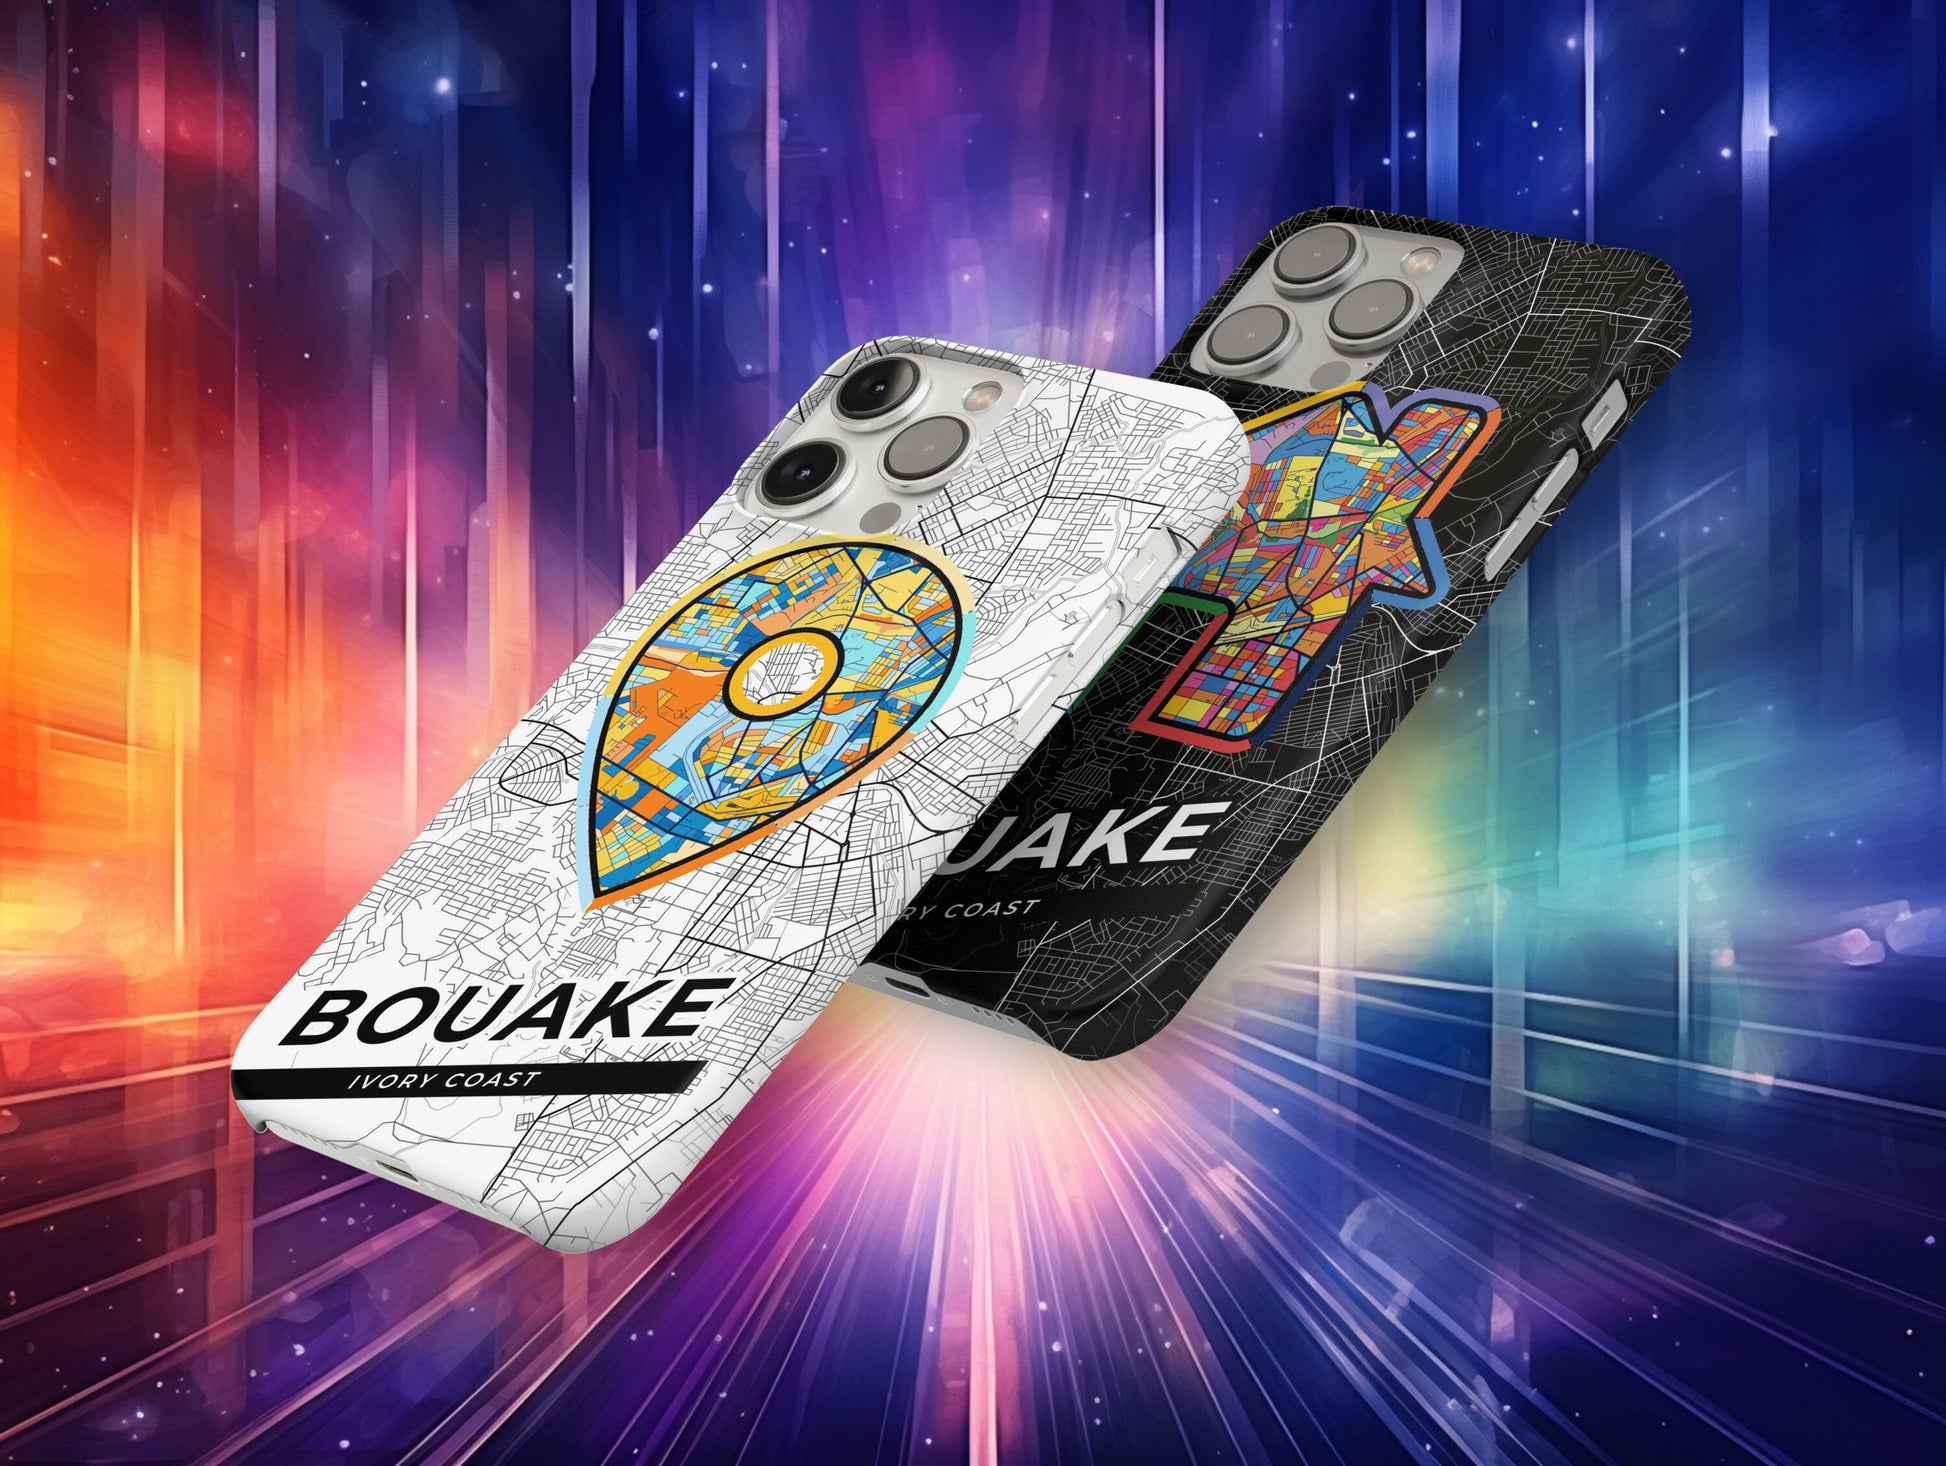 Bouake Ivory Coast slim phone case with colorful icon. Birthday, wedding or housewarming gift. Couple match cases.